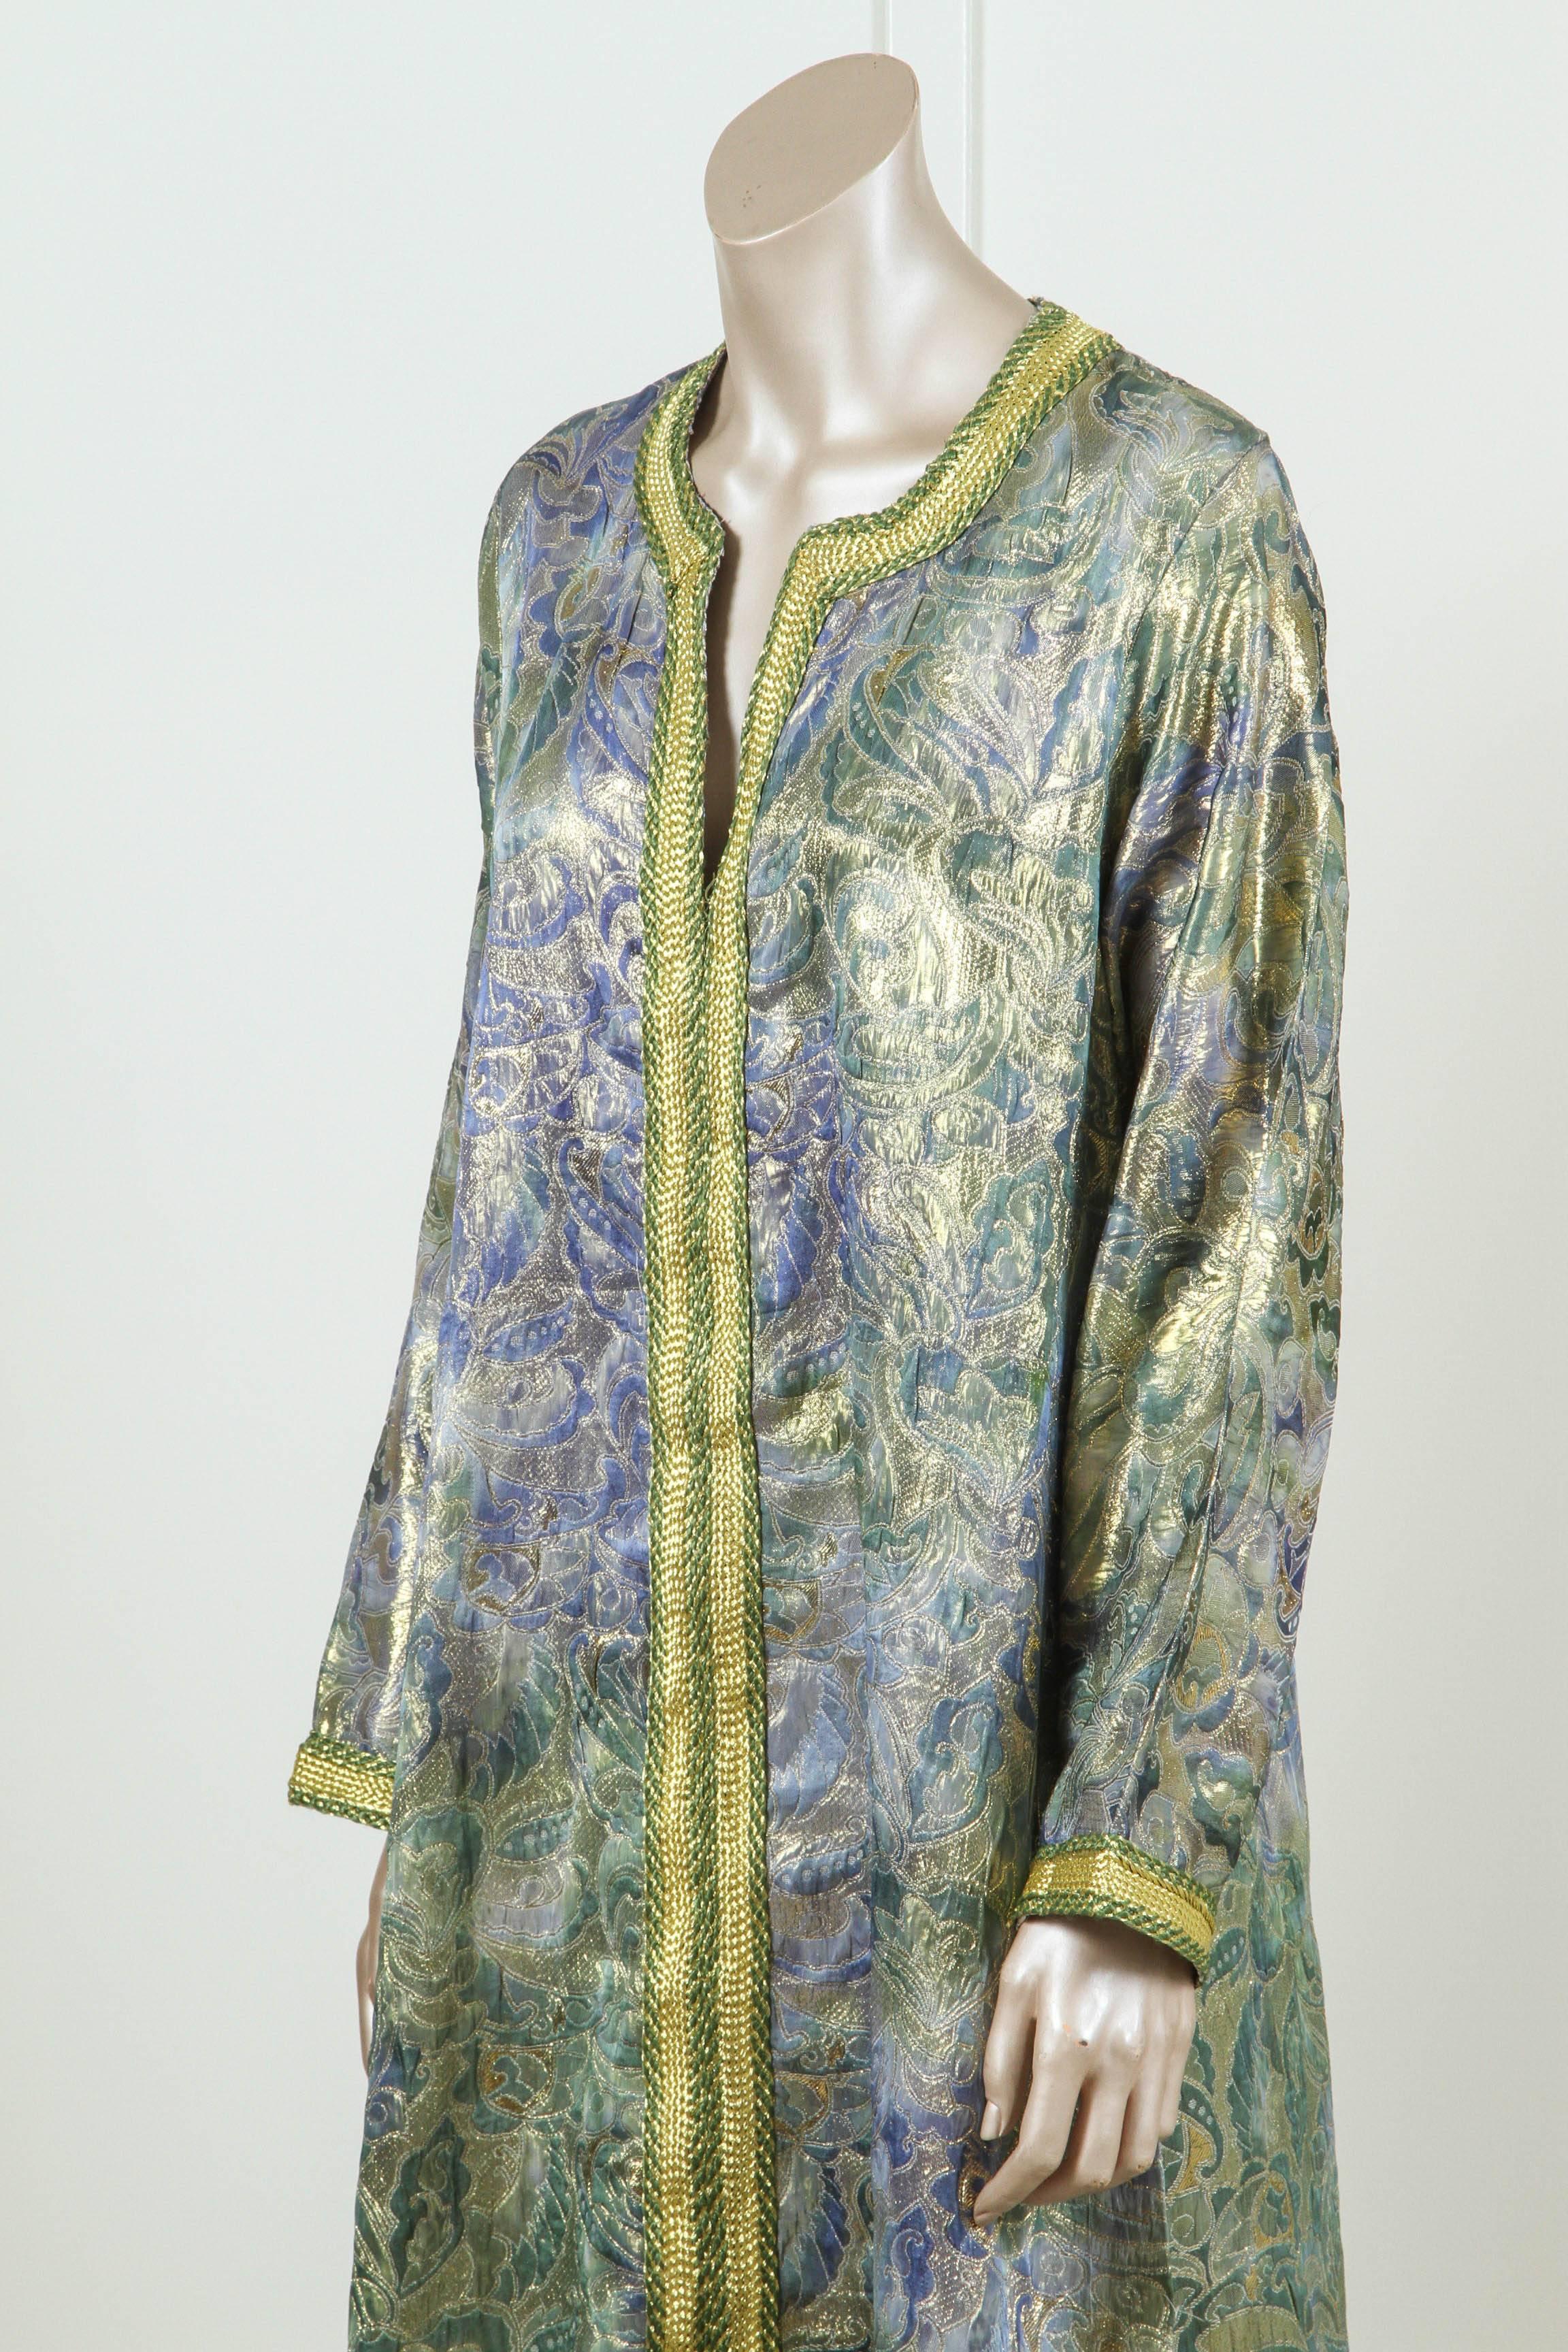 Fabric Vintage Moroccan Designer Caftan Maxi Dress Kaftan Size M to L